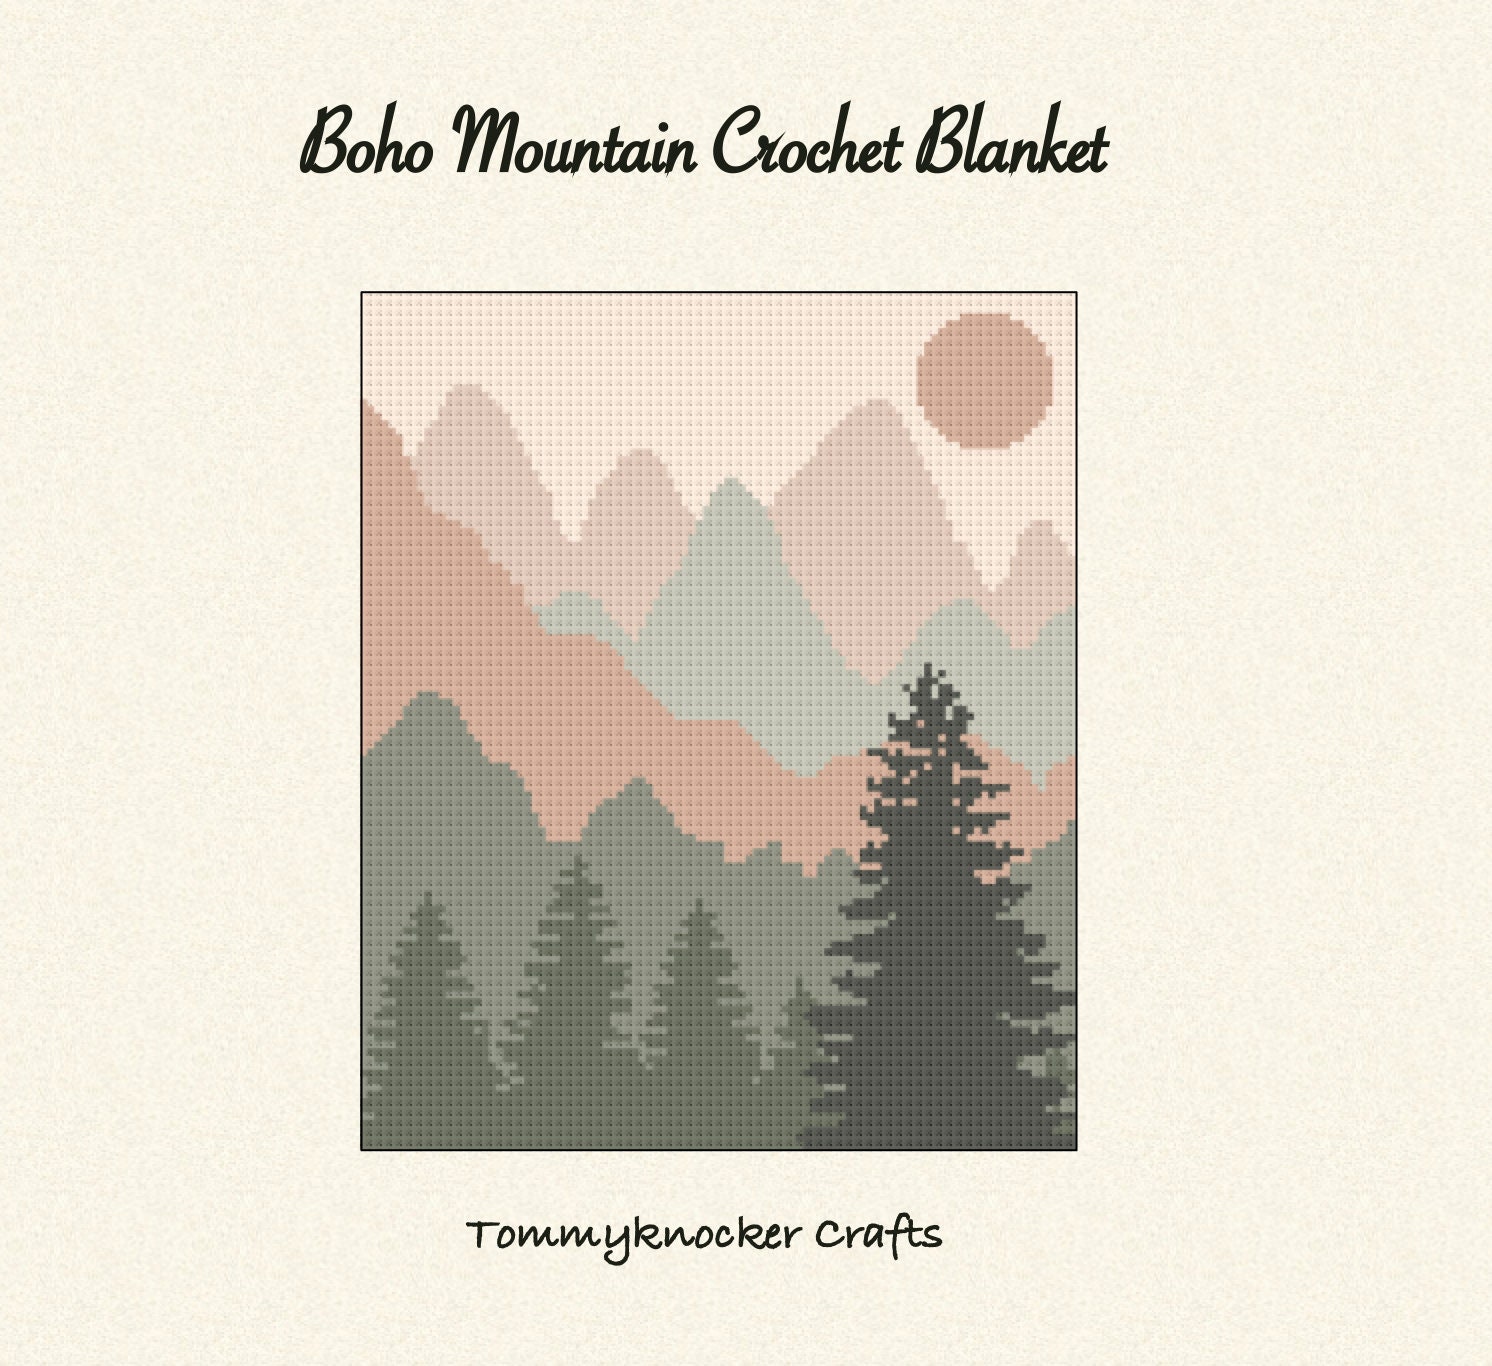 Boho Mountain Blues C2C Crochet Throw Blanket Pattern, C2C Scenic Nature  Crochet 